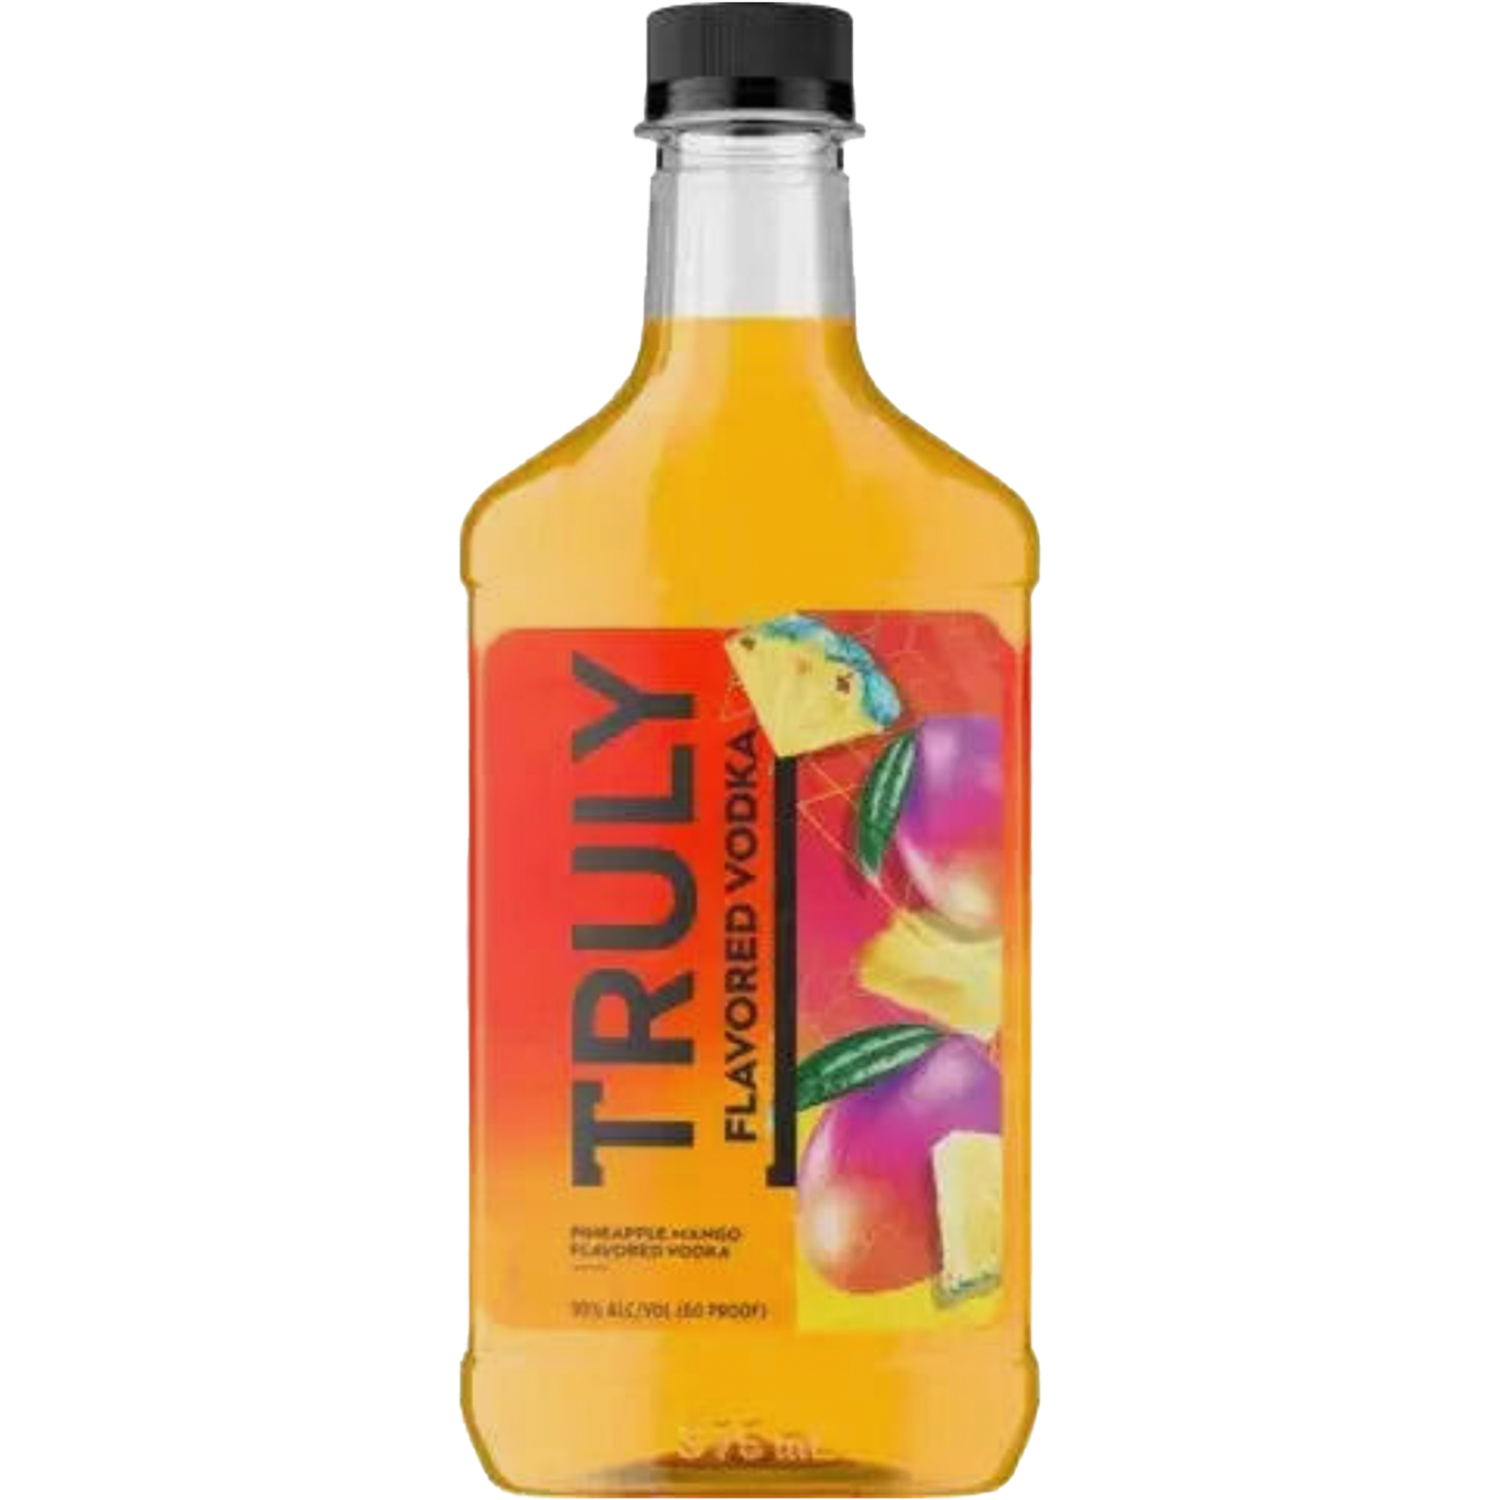 Truly Pineapple Mango Flavored Vodka 375mL